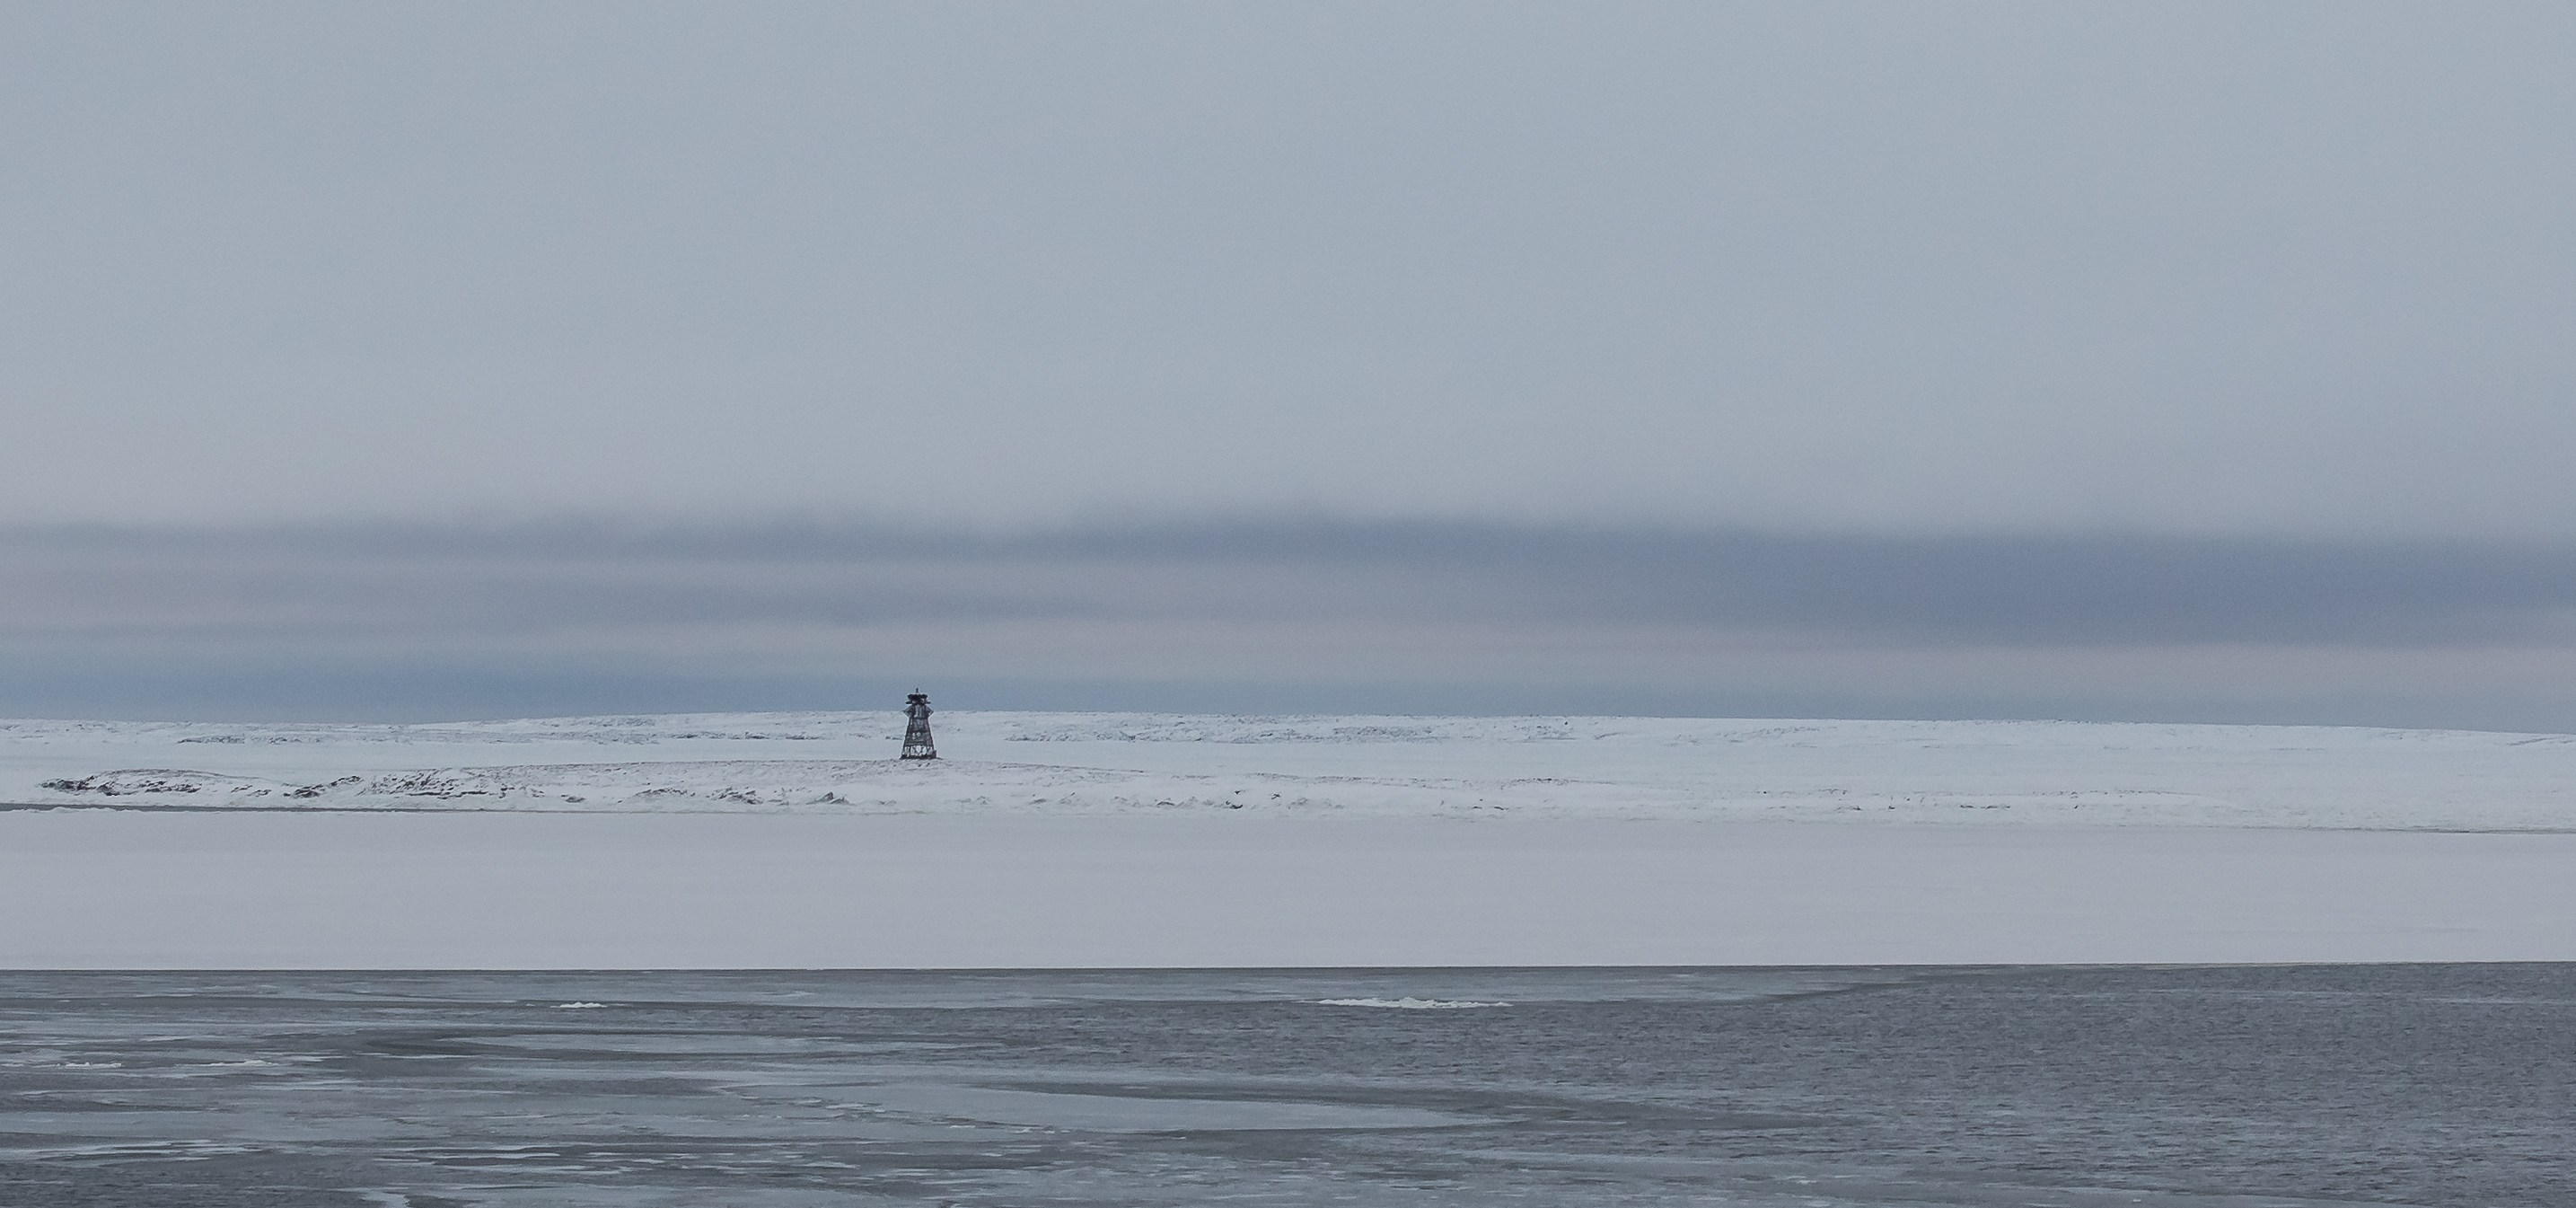 Arctic coast of Russia - Kara sea / Shvetsov island light - World of ...